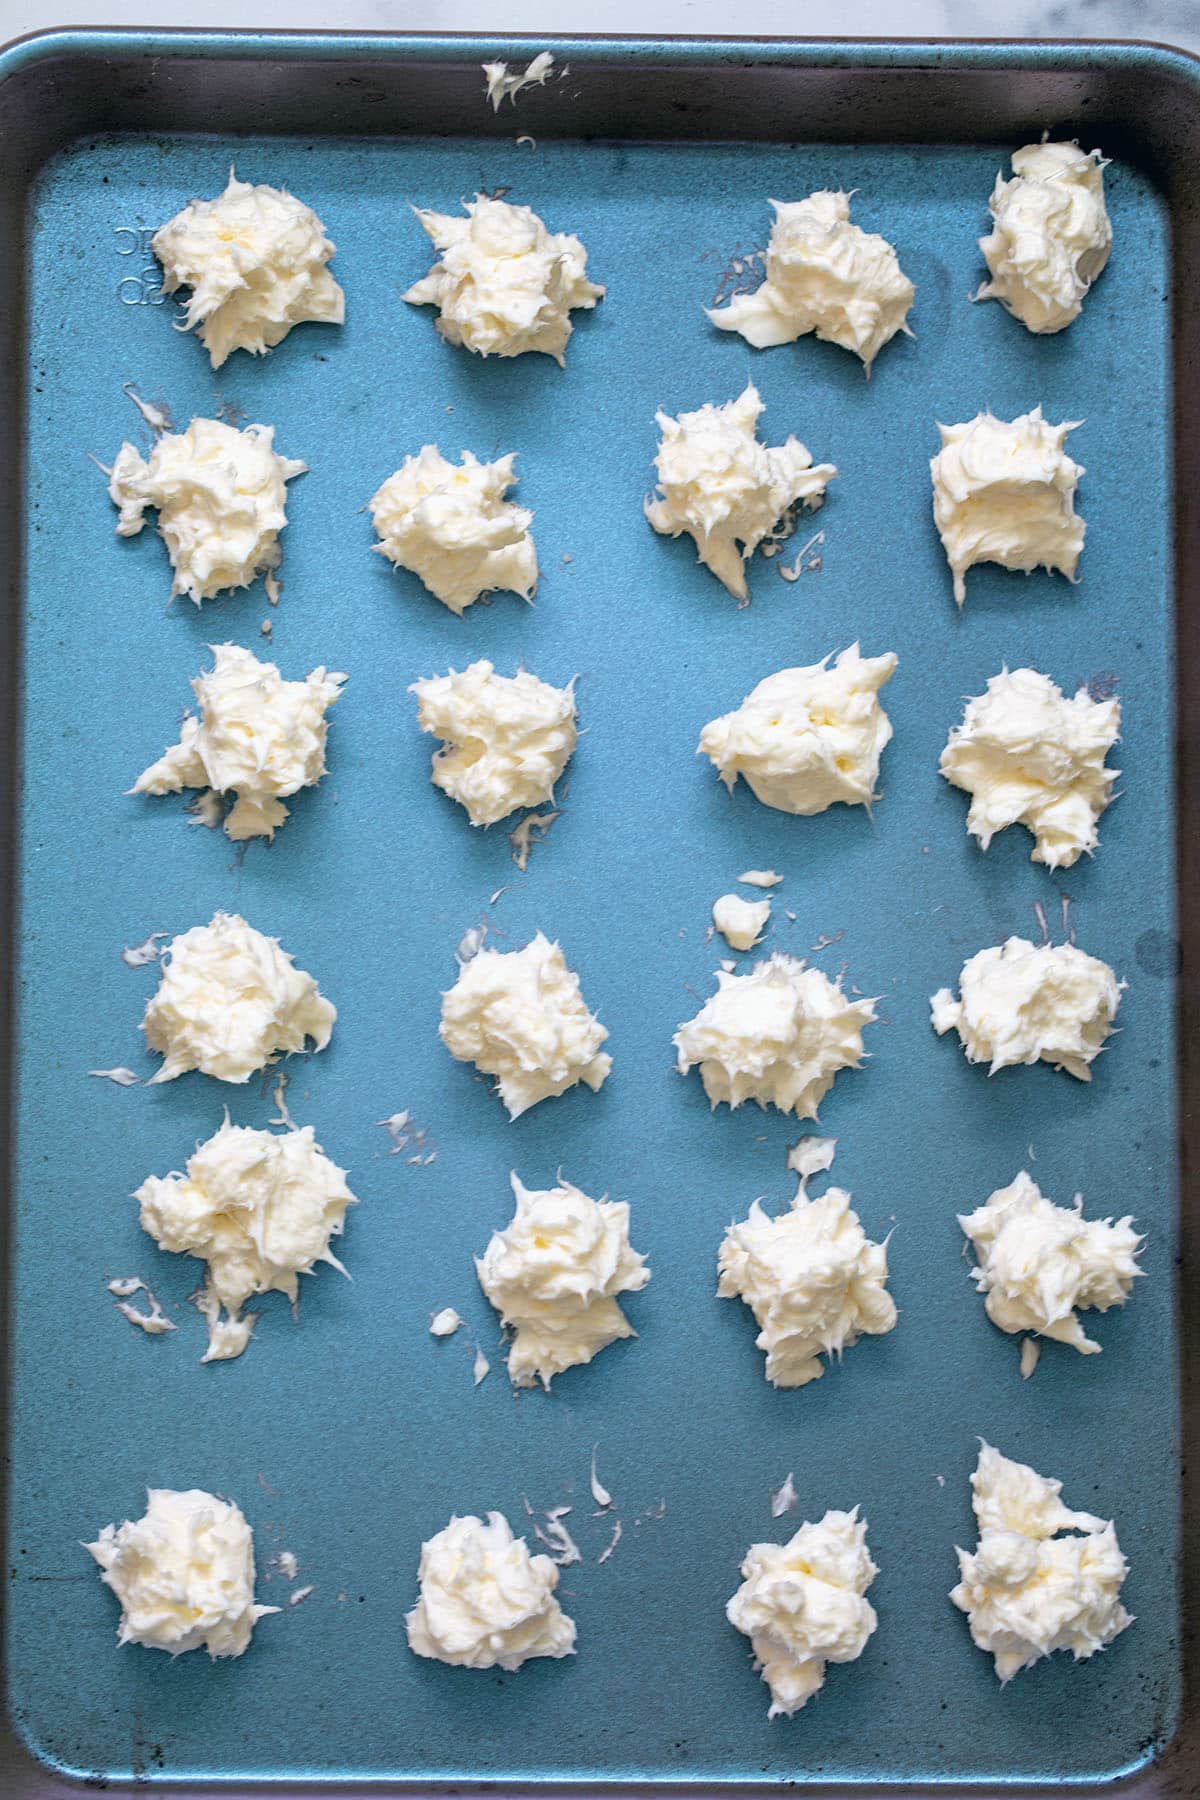 Cream cheese balls on baking sheet.